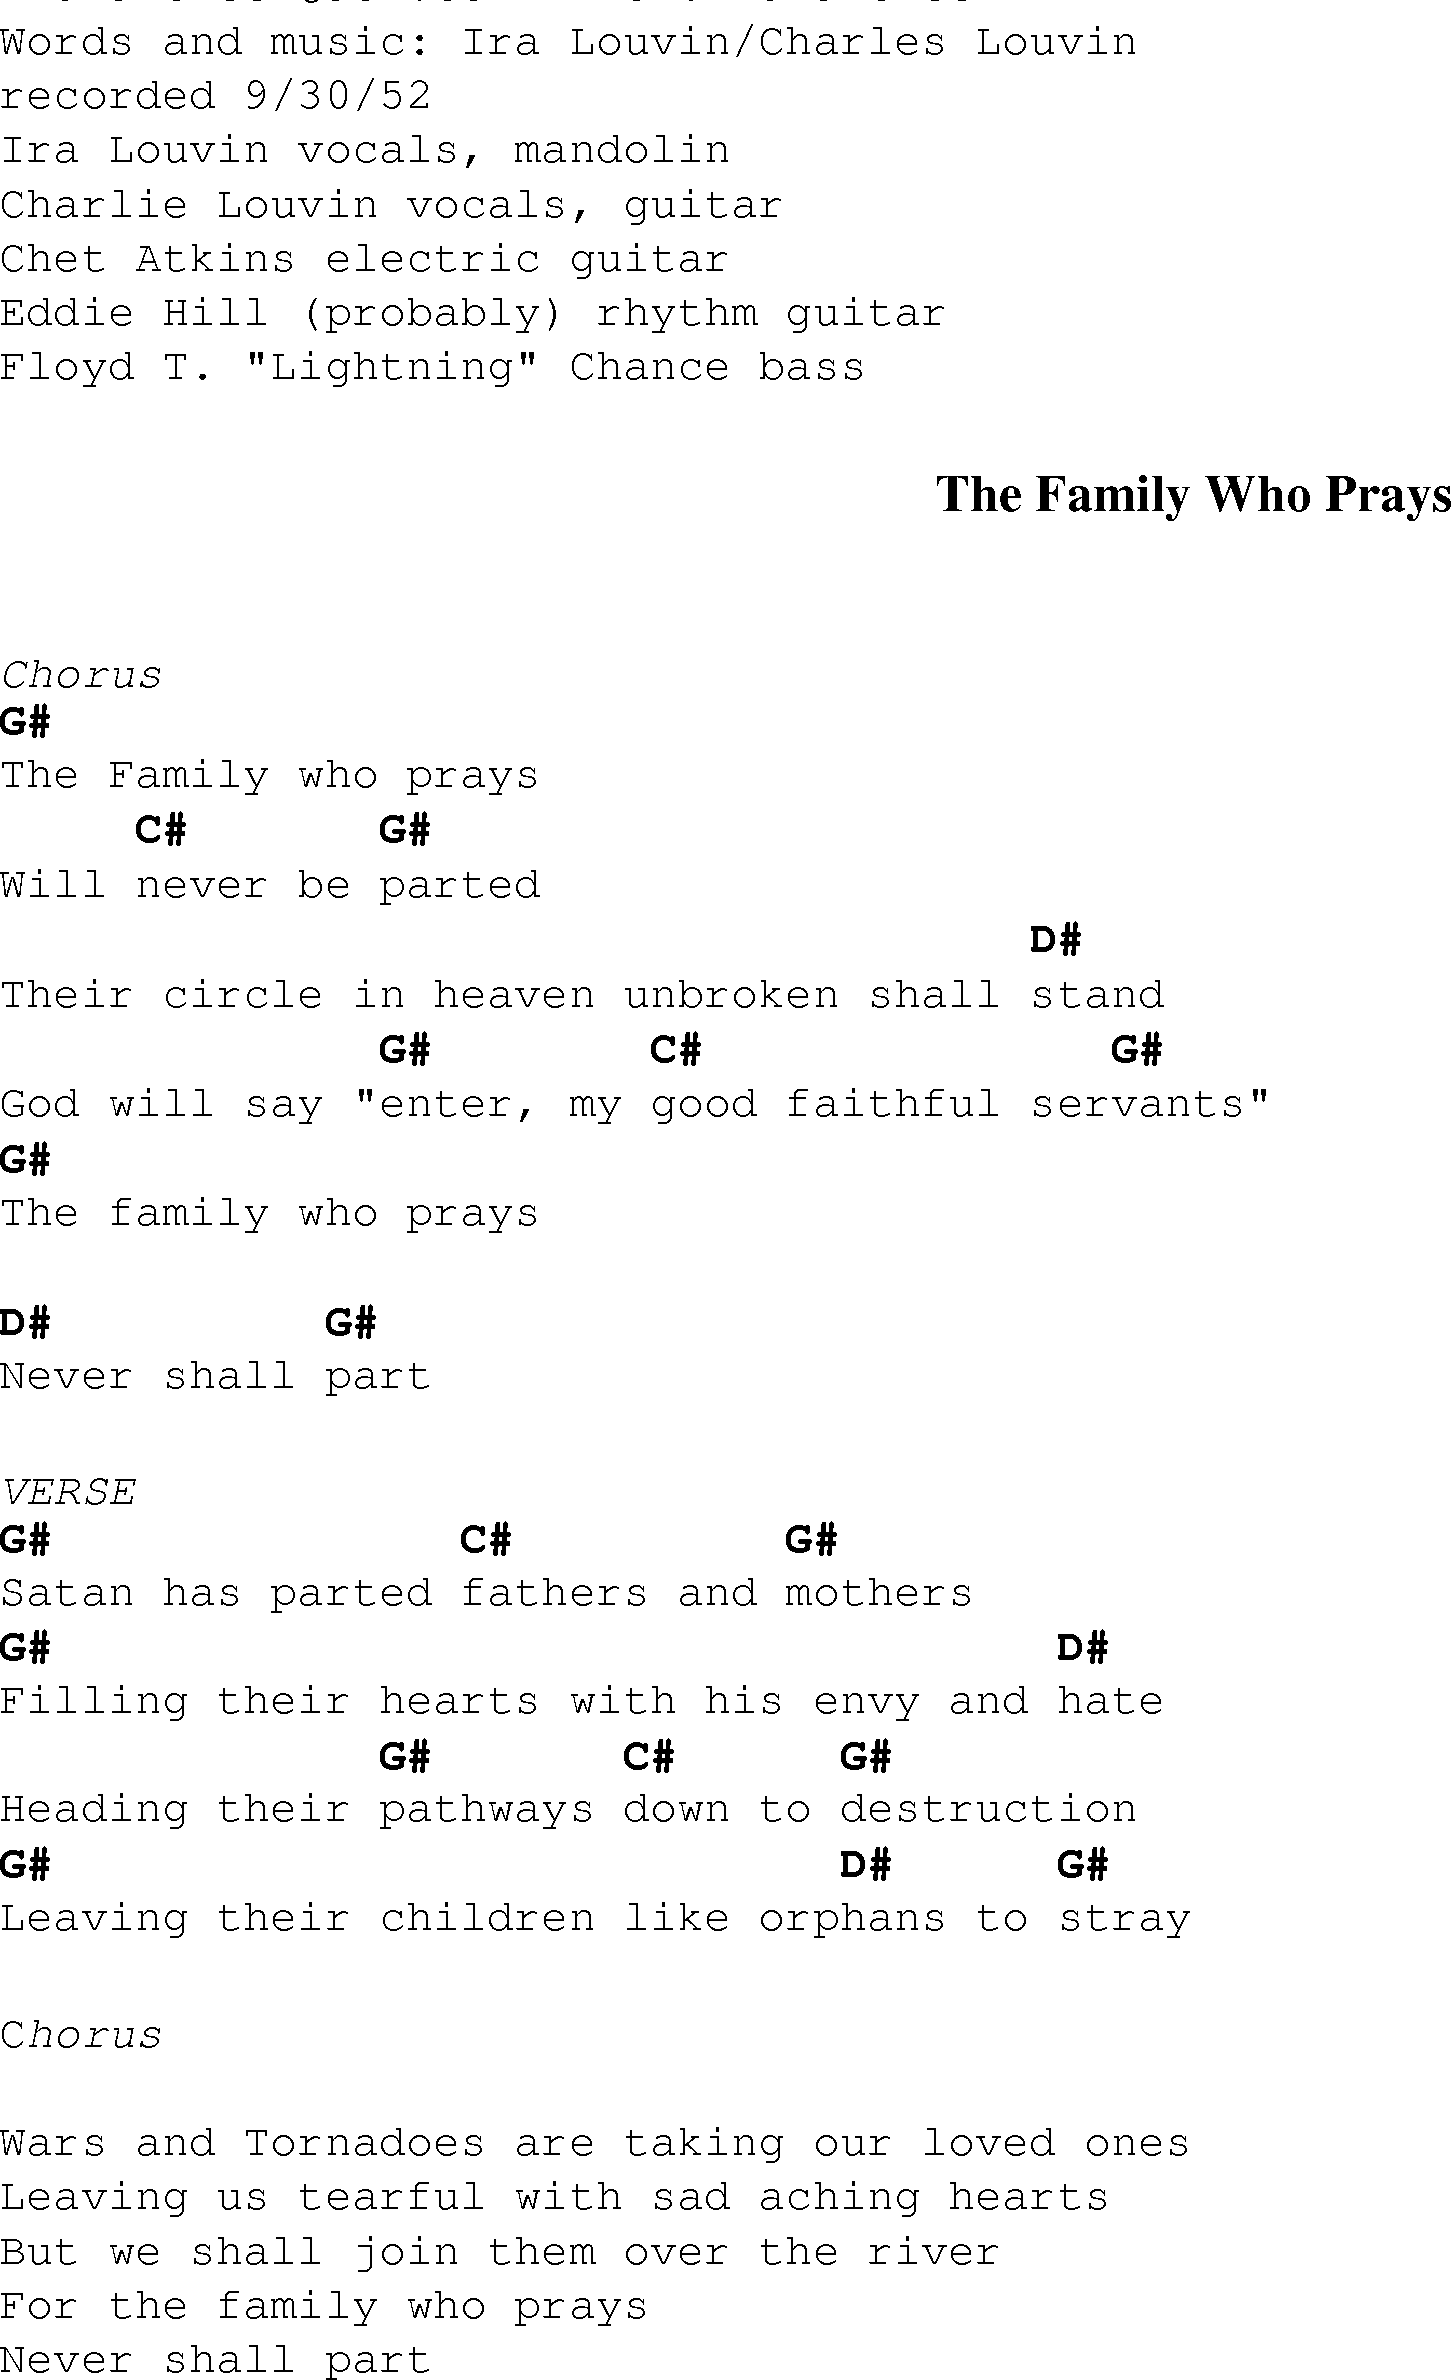 Gospel Song: family_who_prays, lyrics and chords.